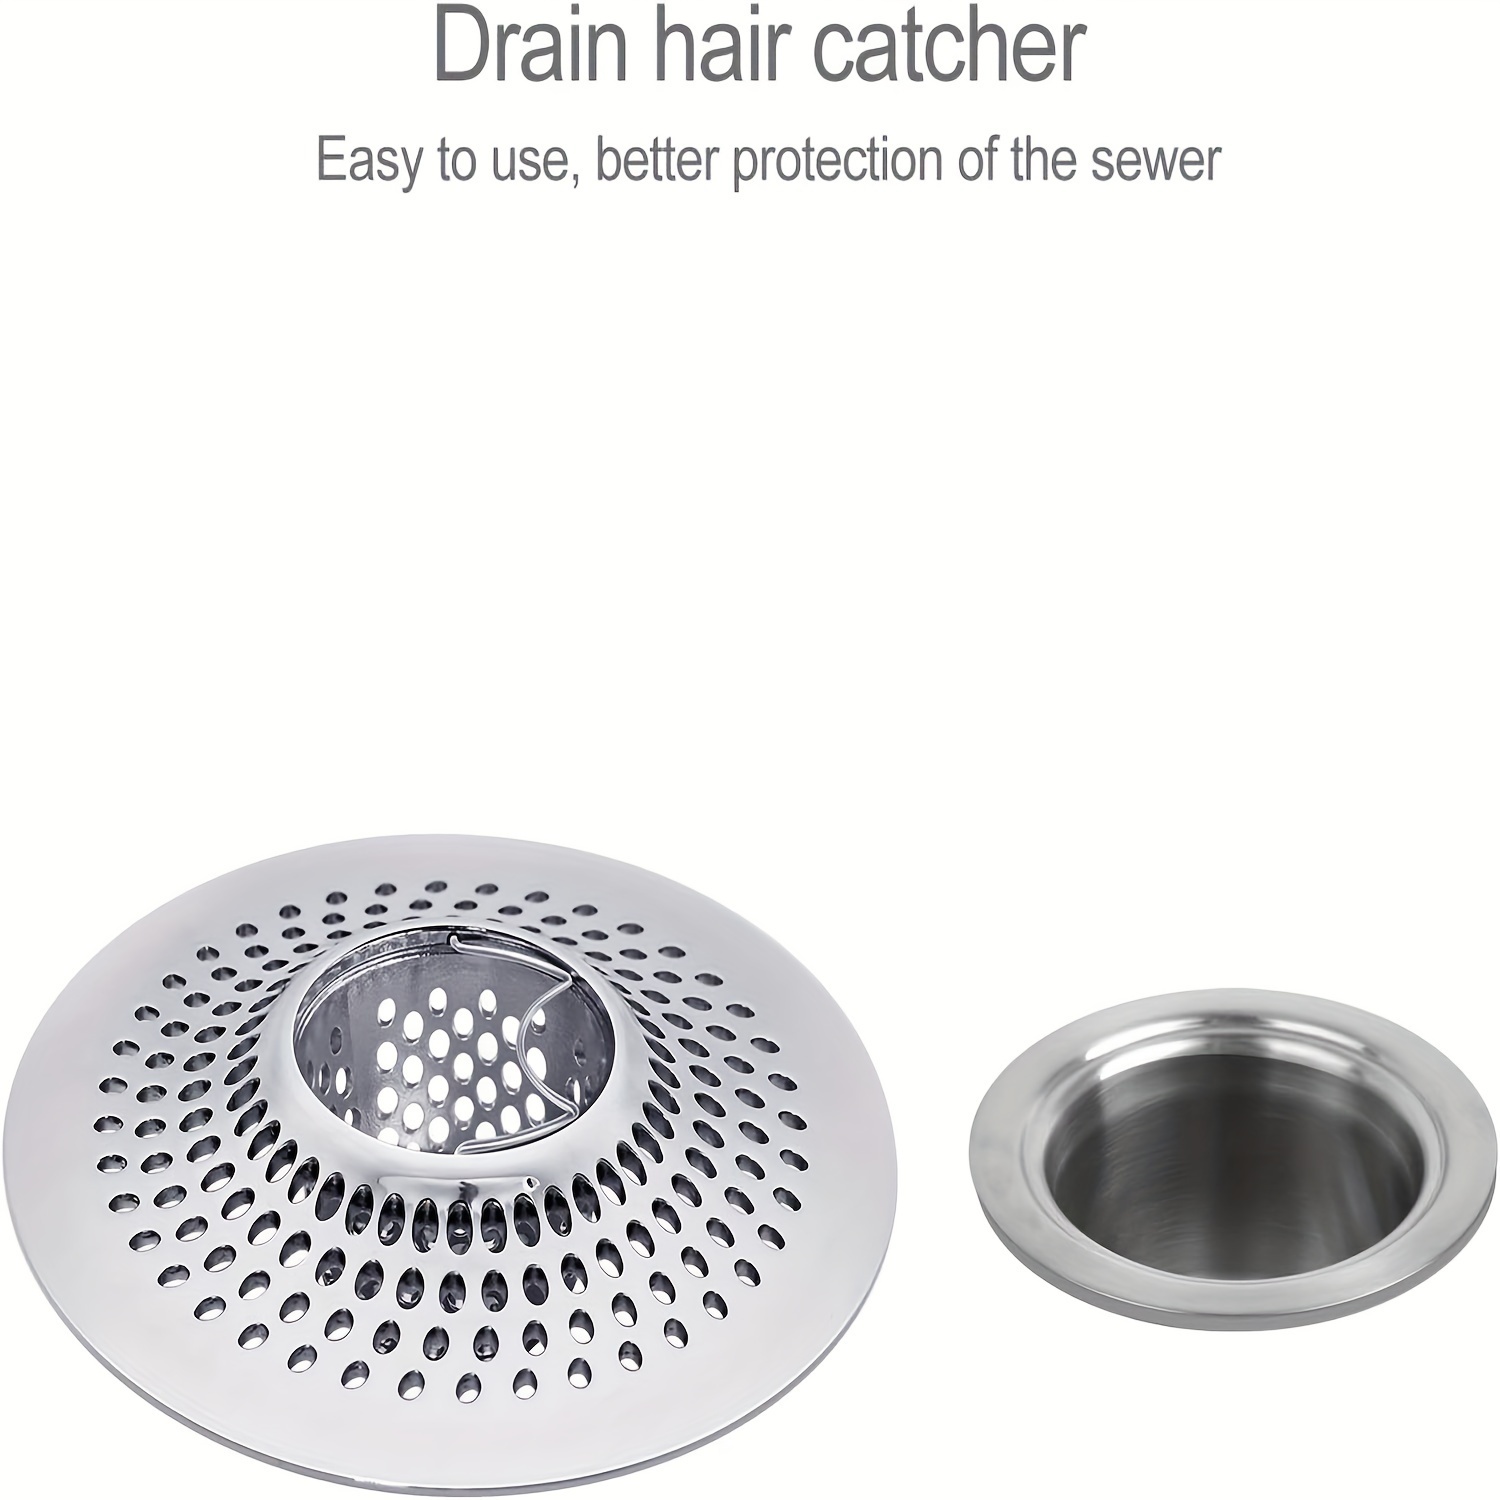 Lekeye Bathroom Shower Drain Hair Catcher - Review 